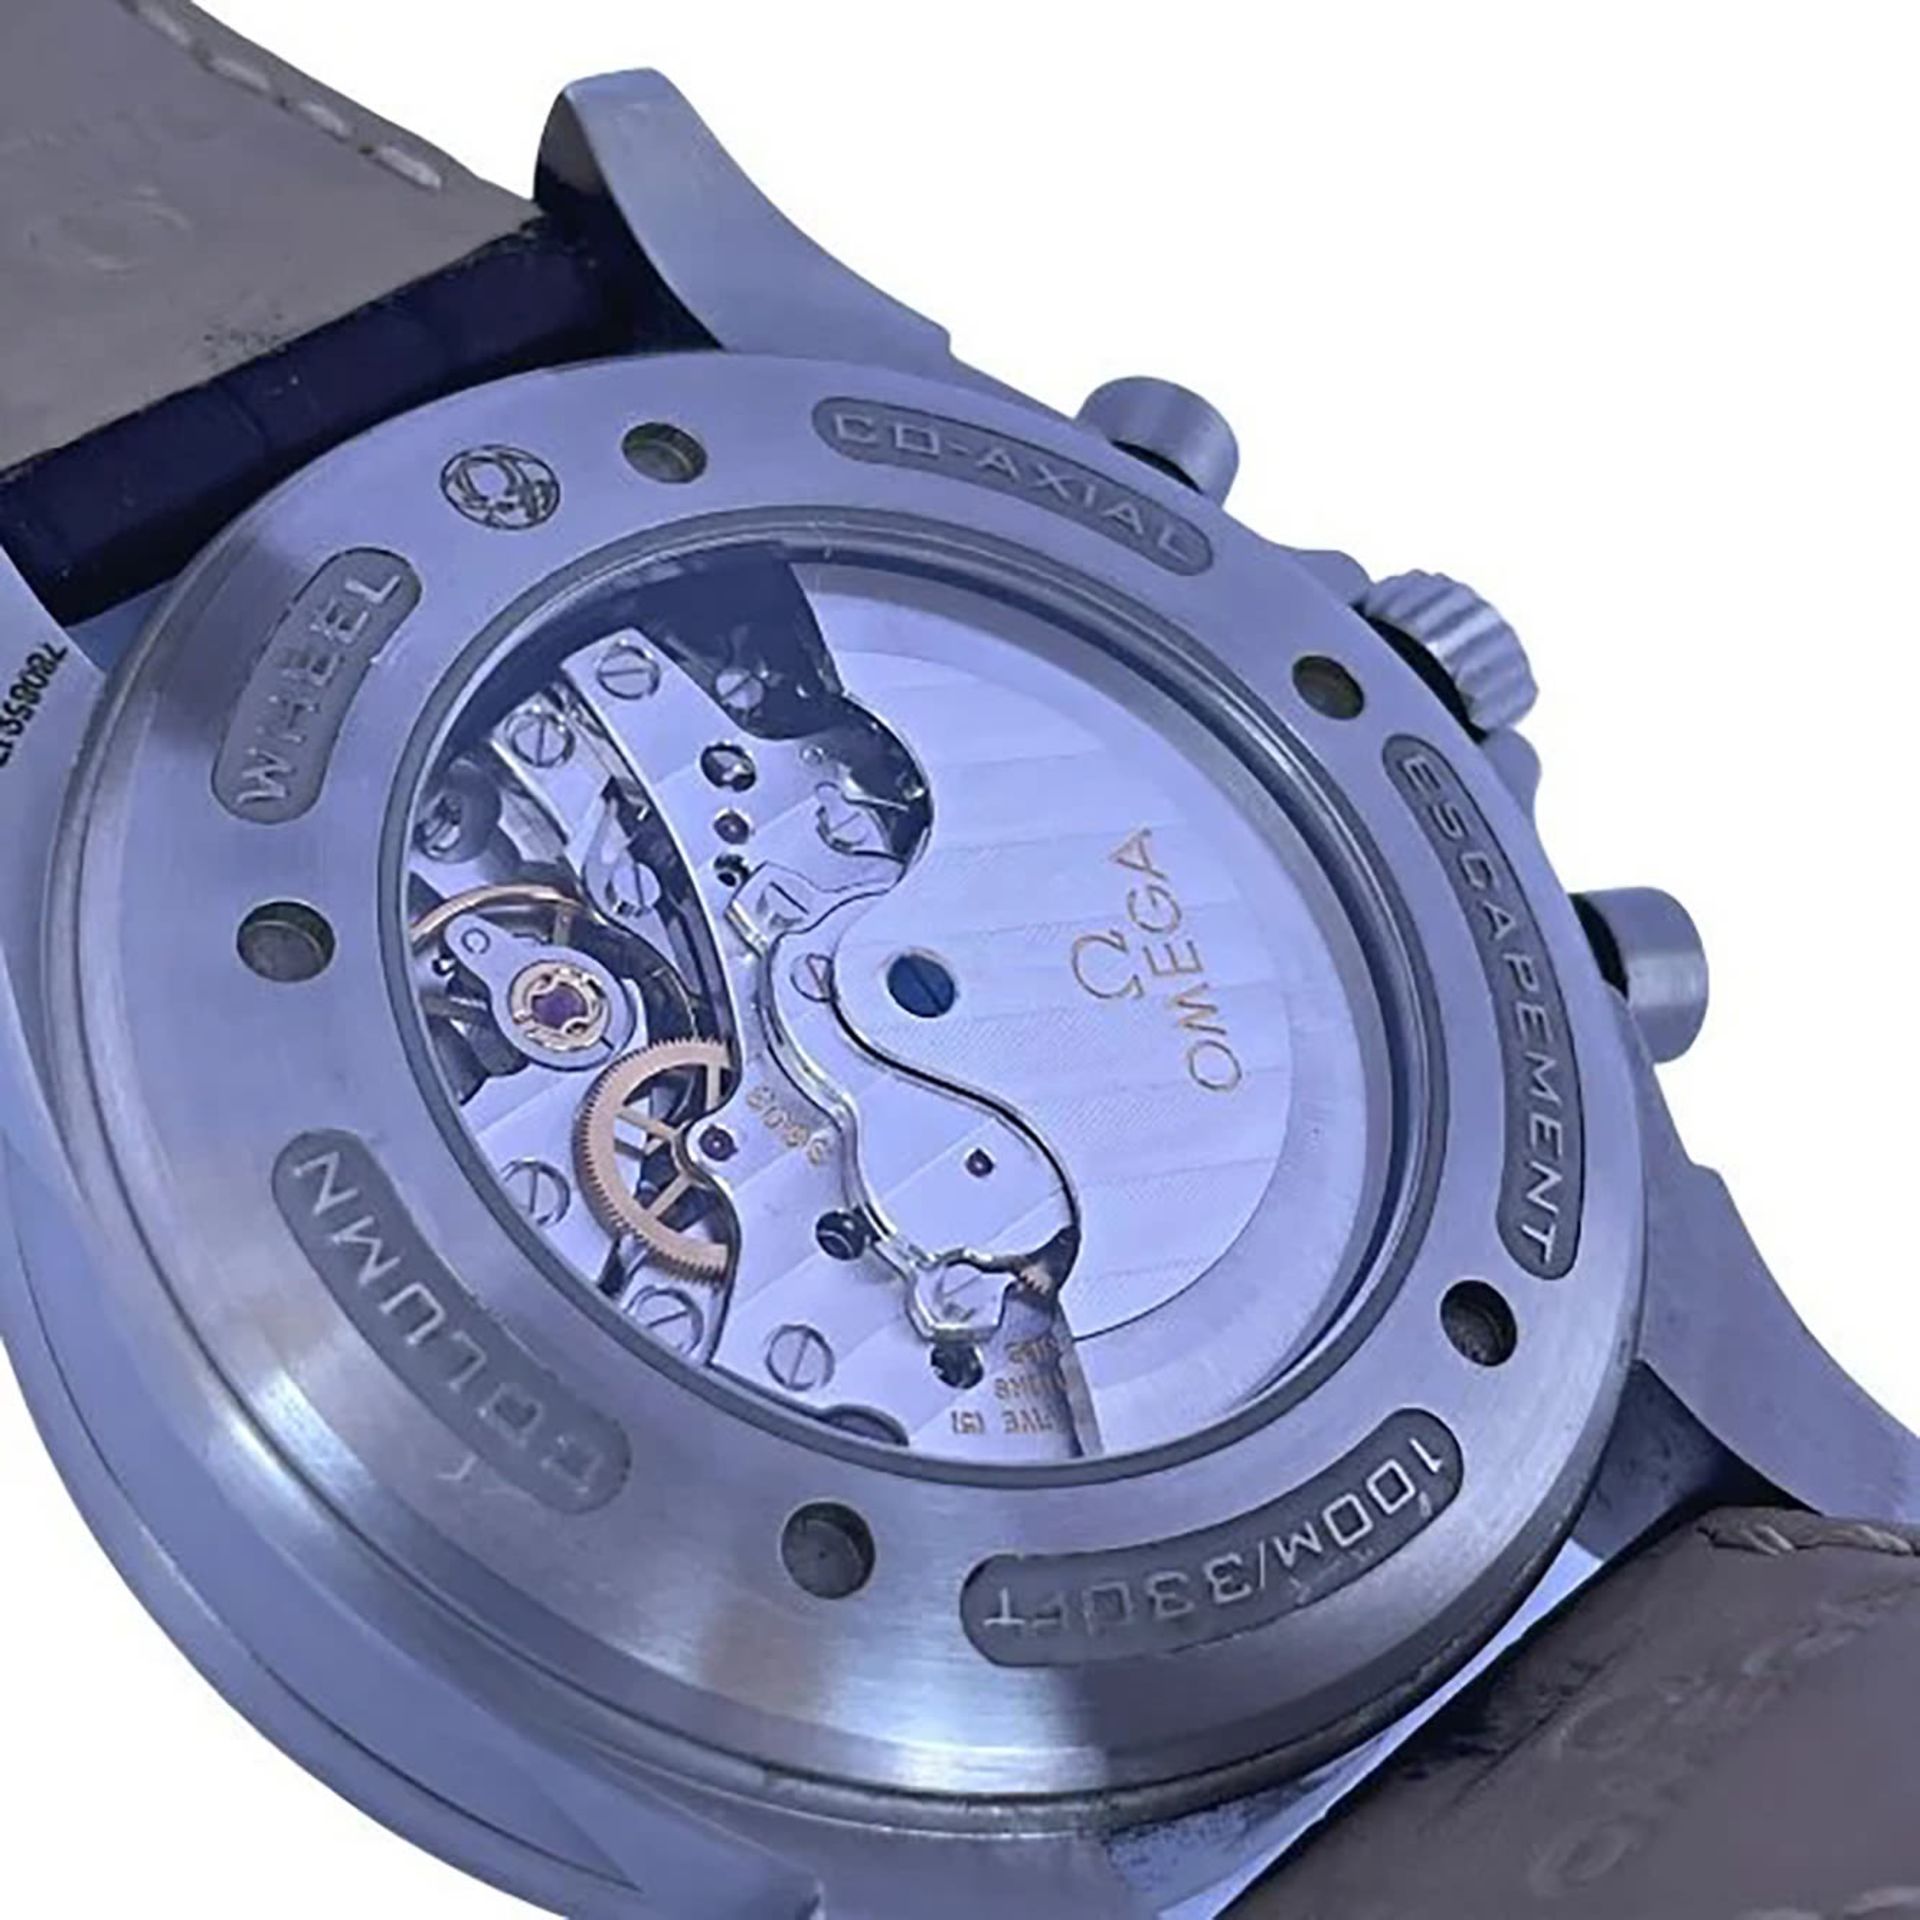 Omega De Ville Co-Axial Chronoscope wristwatch - Image 4 of 6